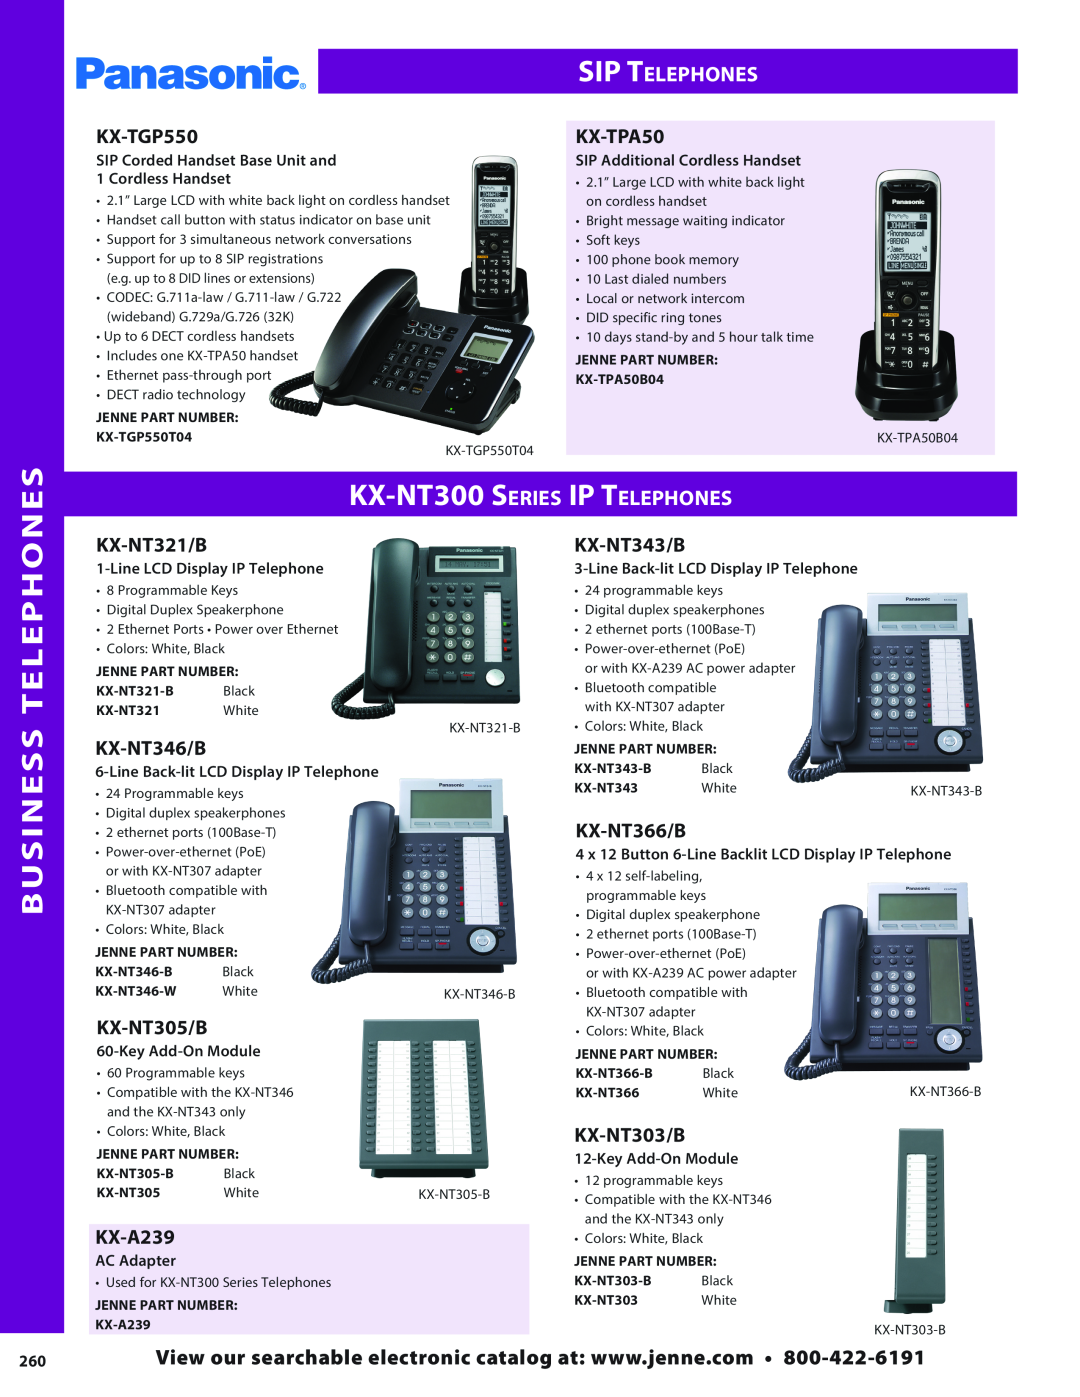 Panasonic PMPU2000 Business Telephones, SIP Telephones, KX-NT300Series IP Telephones, SIP Corded Handset Base Unit and 